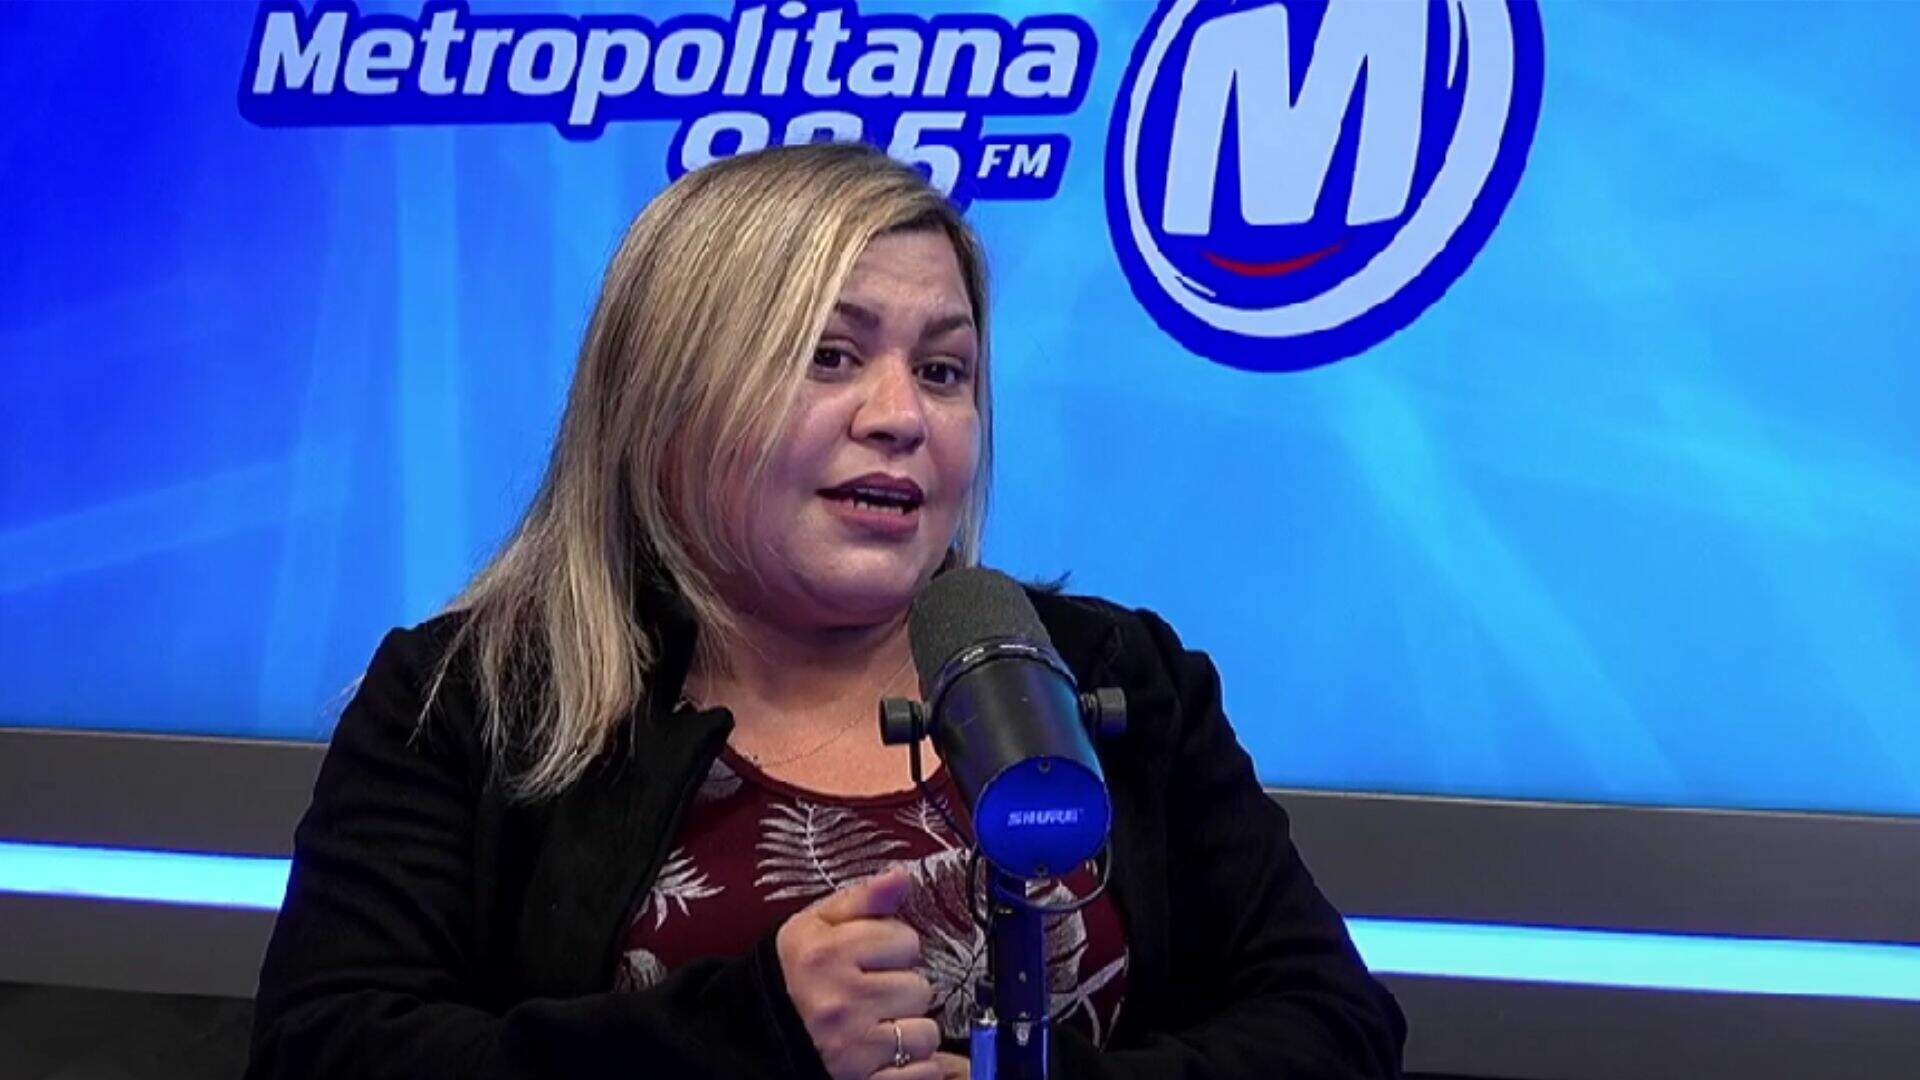 EXCLUSIVO: Casal impossível? Lene Sensitiva pressente romance entre ex-BBBs - Metropolitana FM